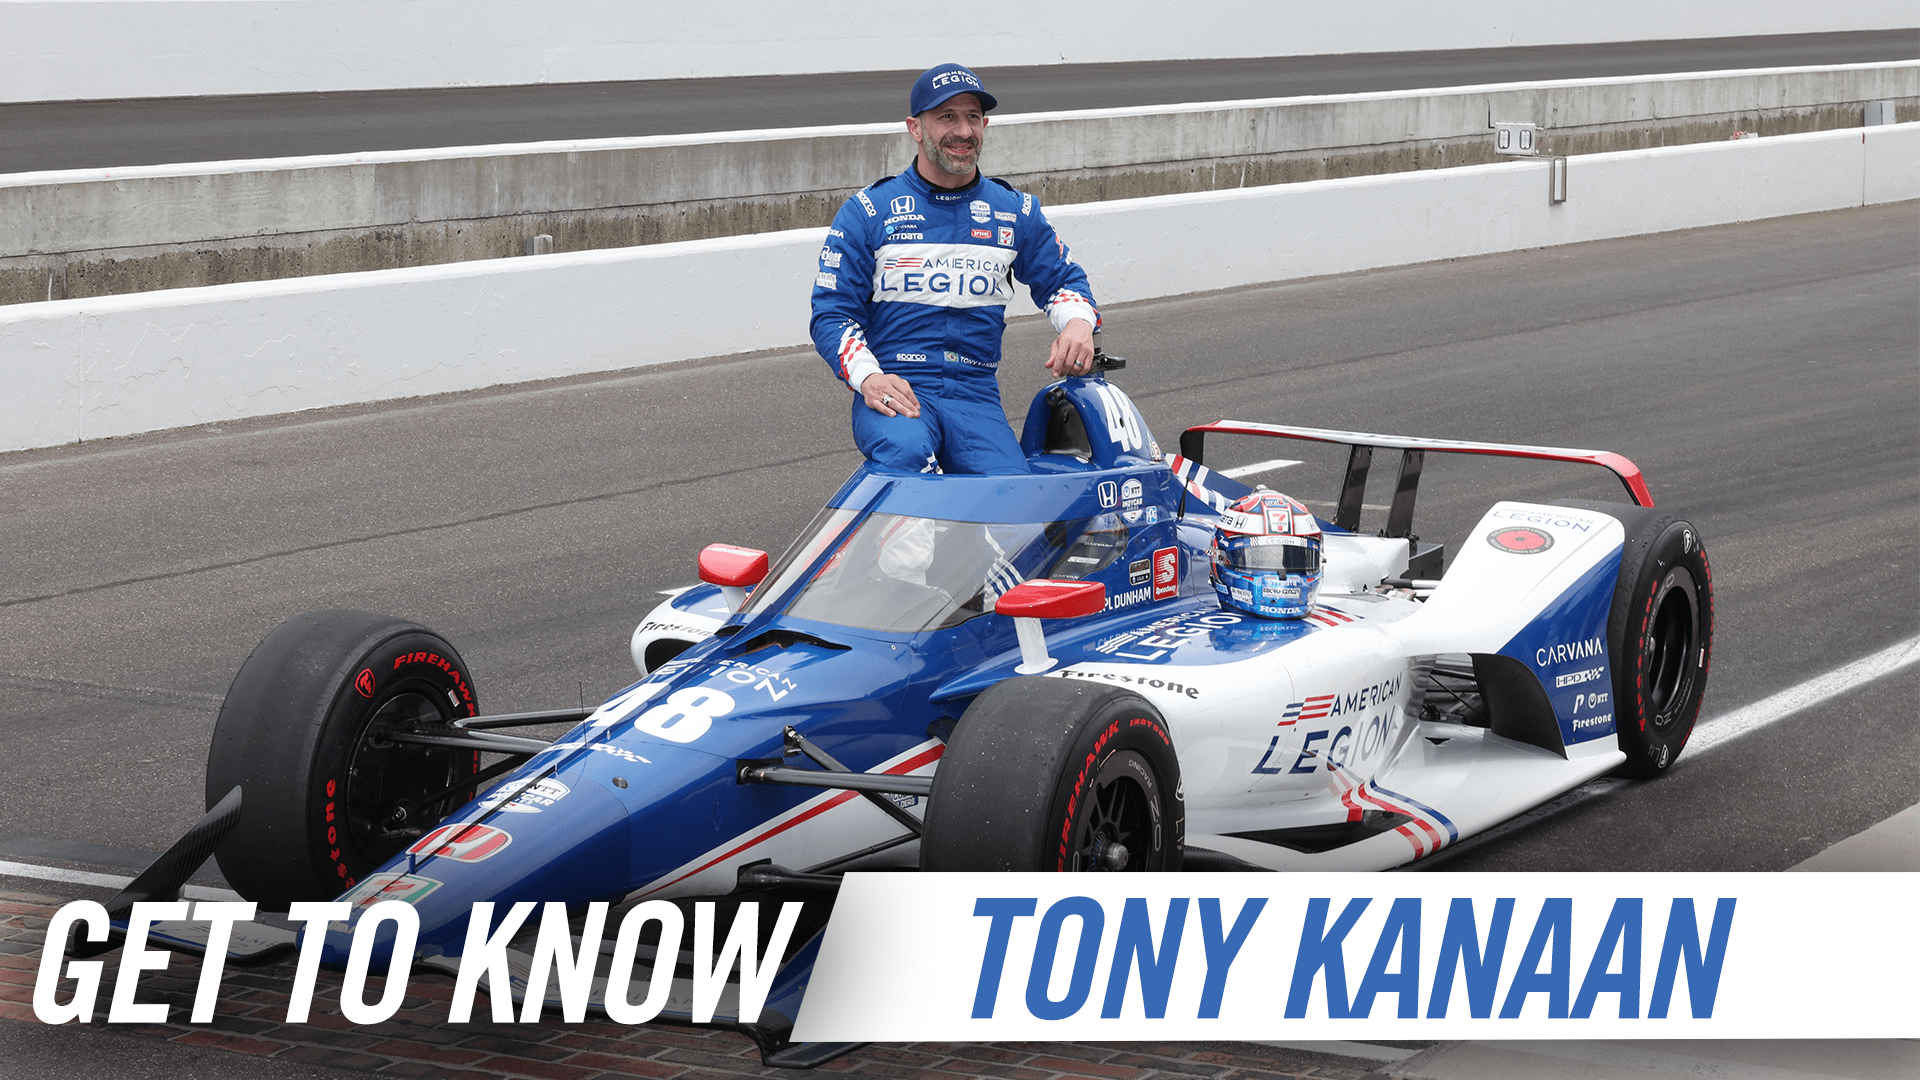 Get To Know Tony Kanaan Chip Ganassi Racing, Indy 500